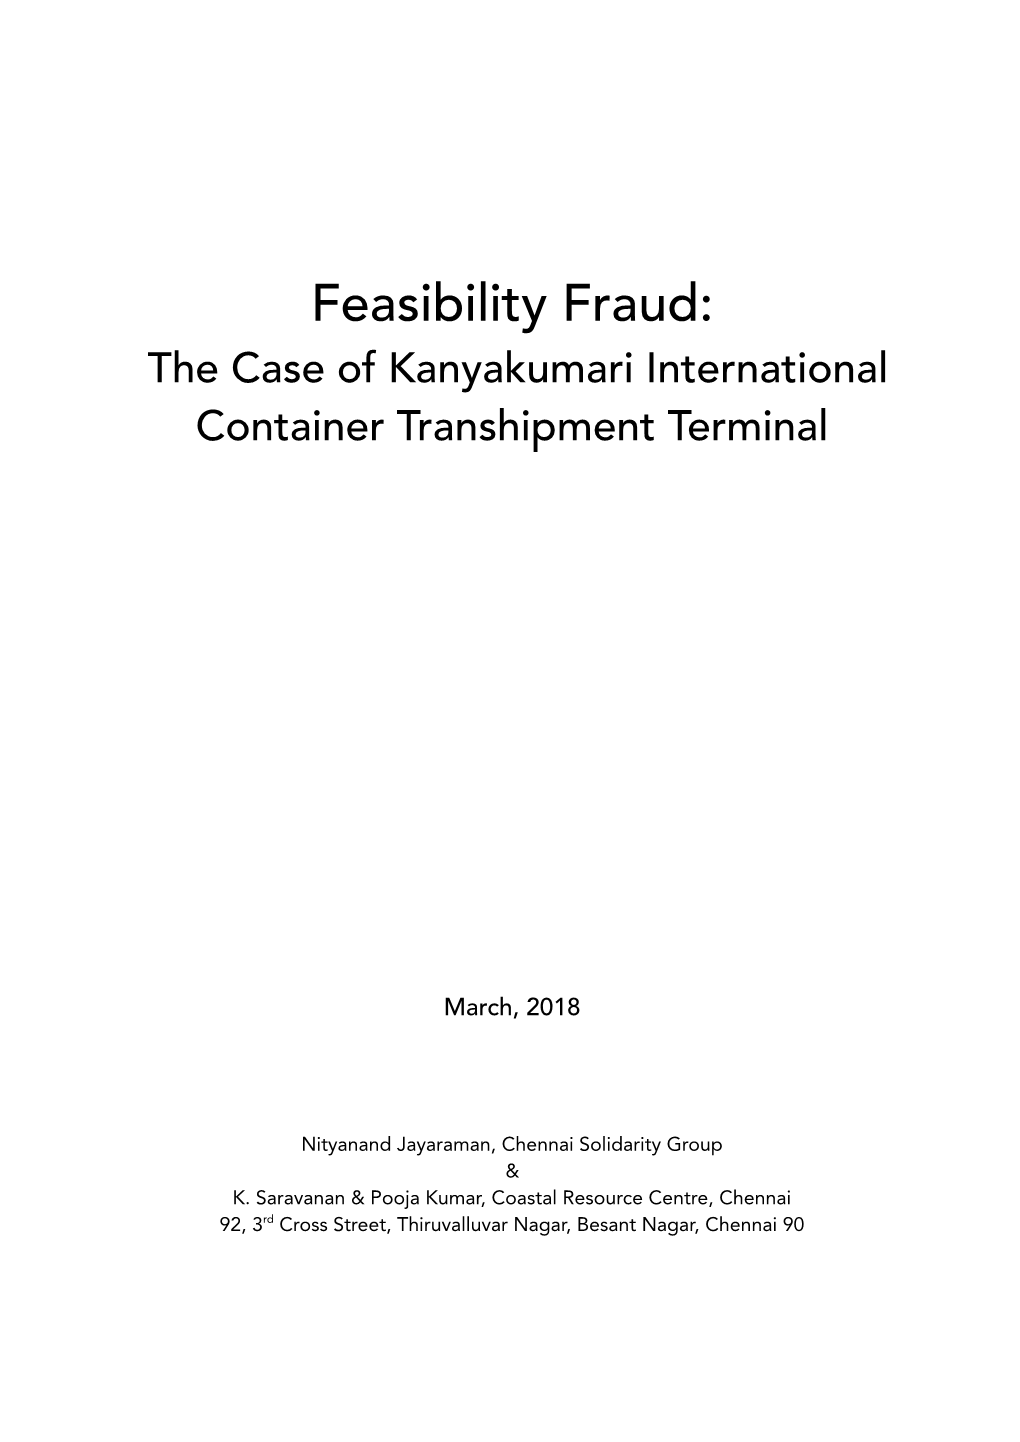 Feasibility Fraud: the Case of Kanyakumari International Container Transhipment Terminal